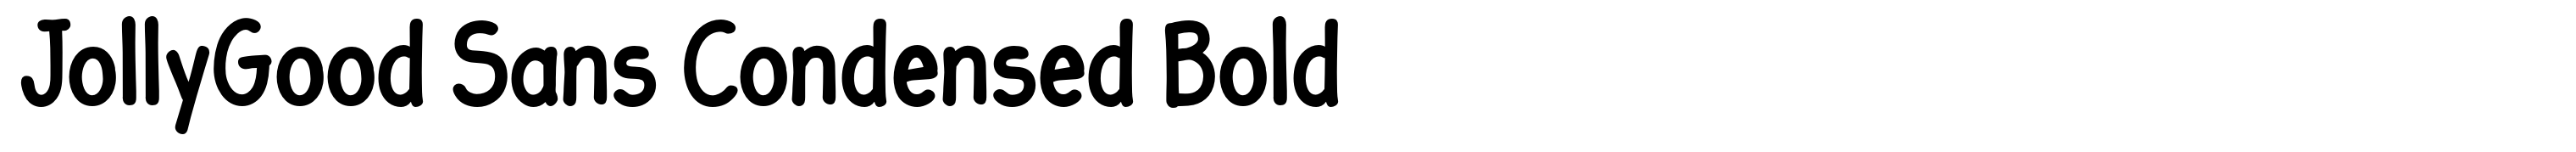 JollyGood Sans Condensed Bold